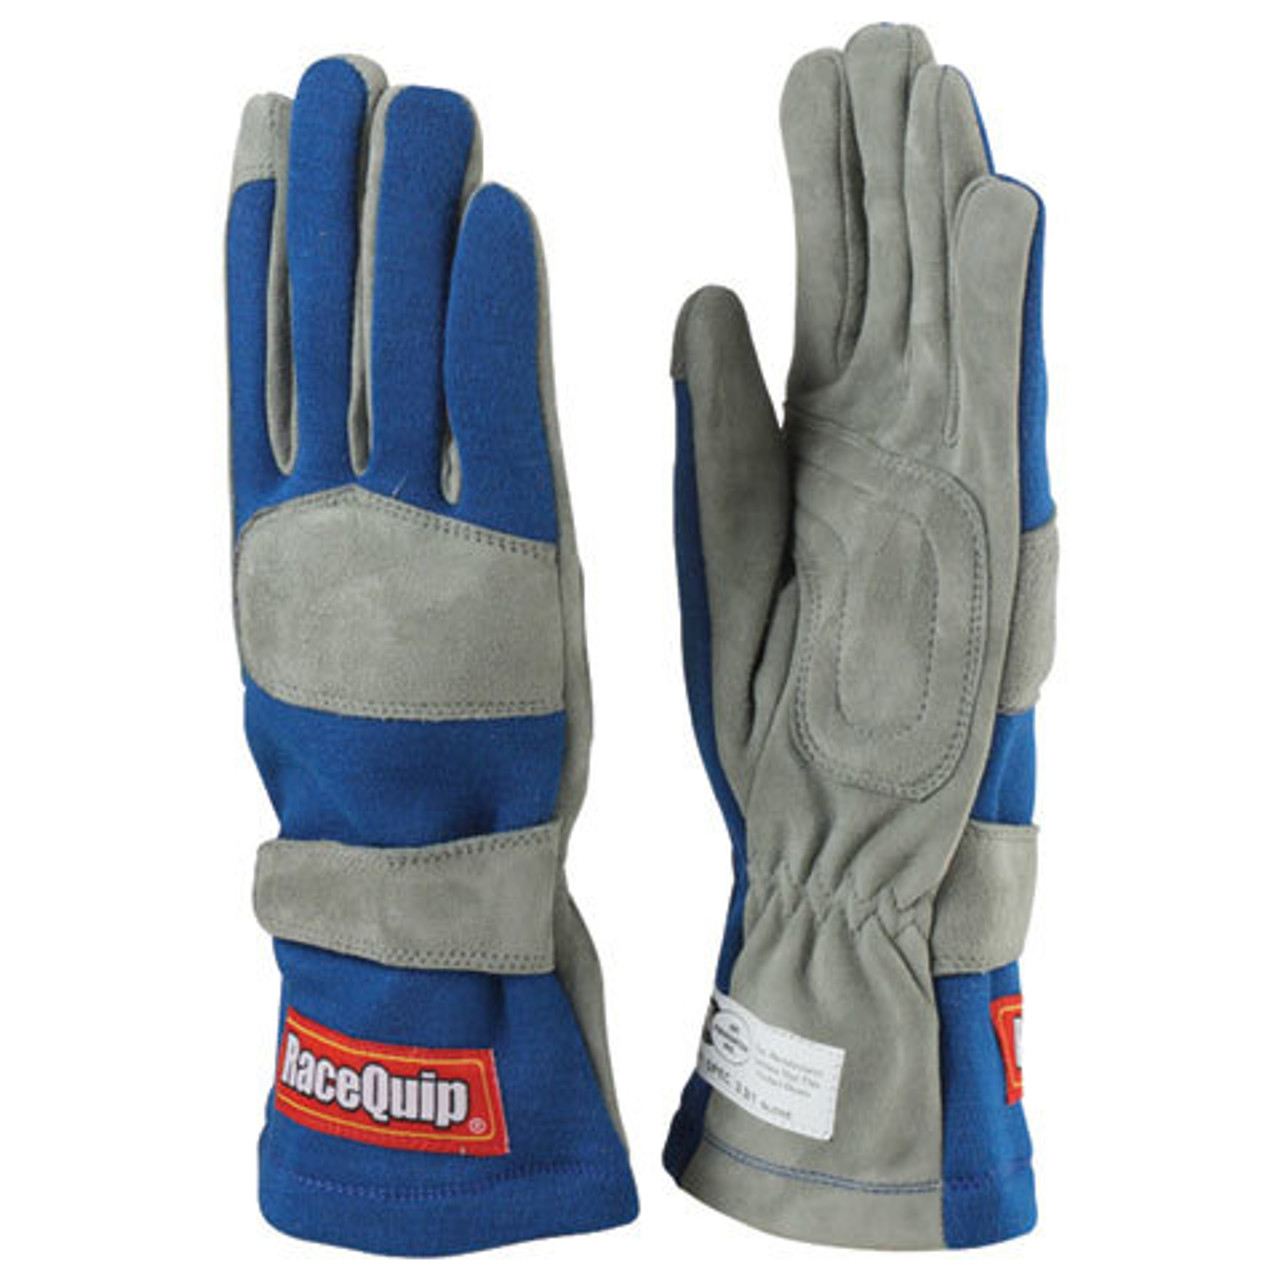 RaceQuip Gloves Single Layer X-Large Blue SFI